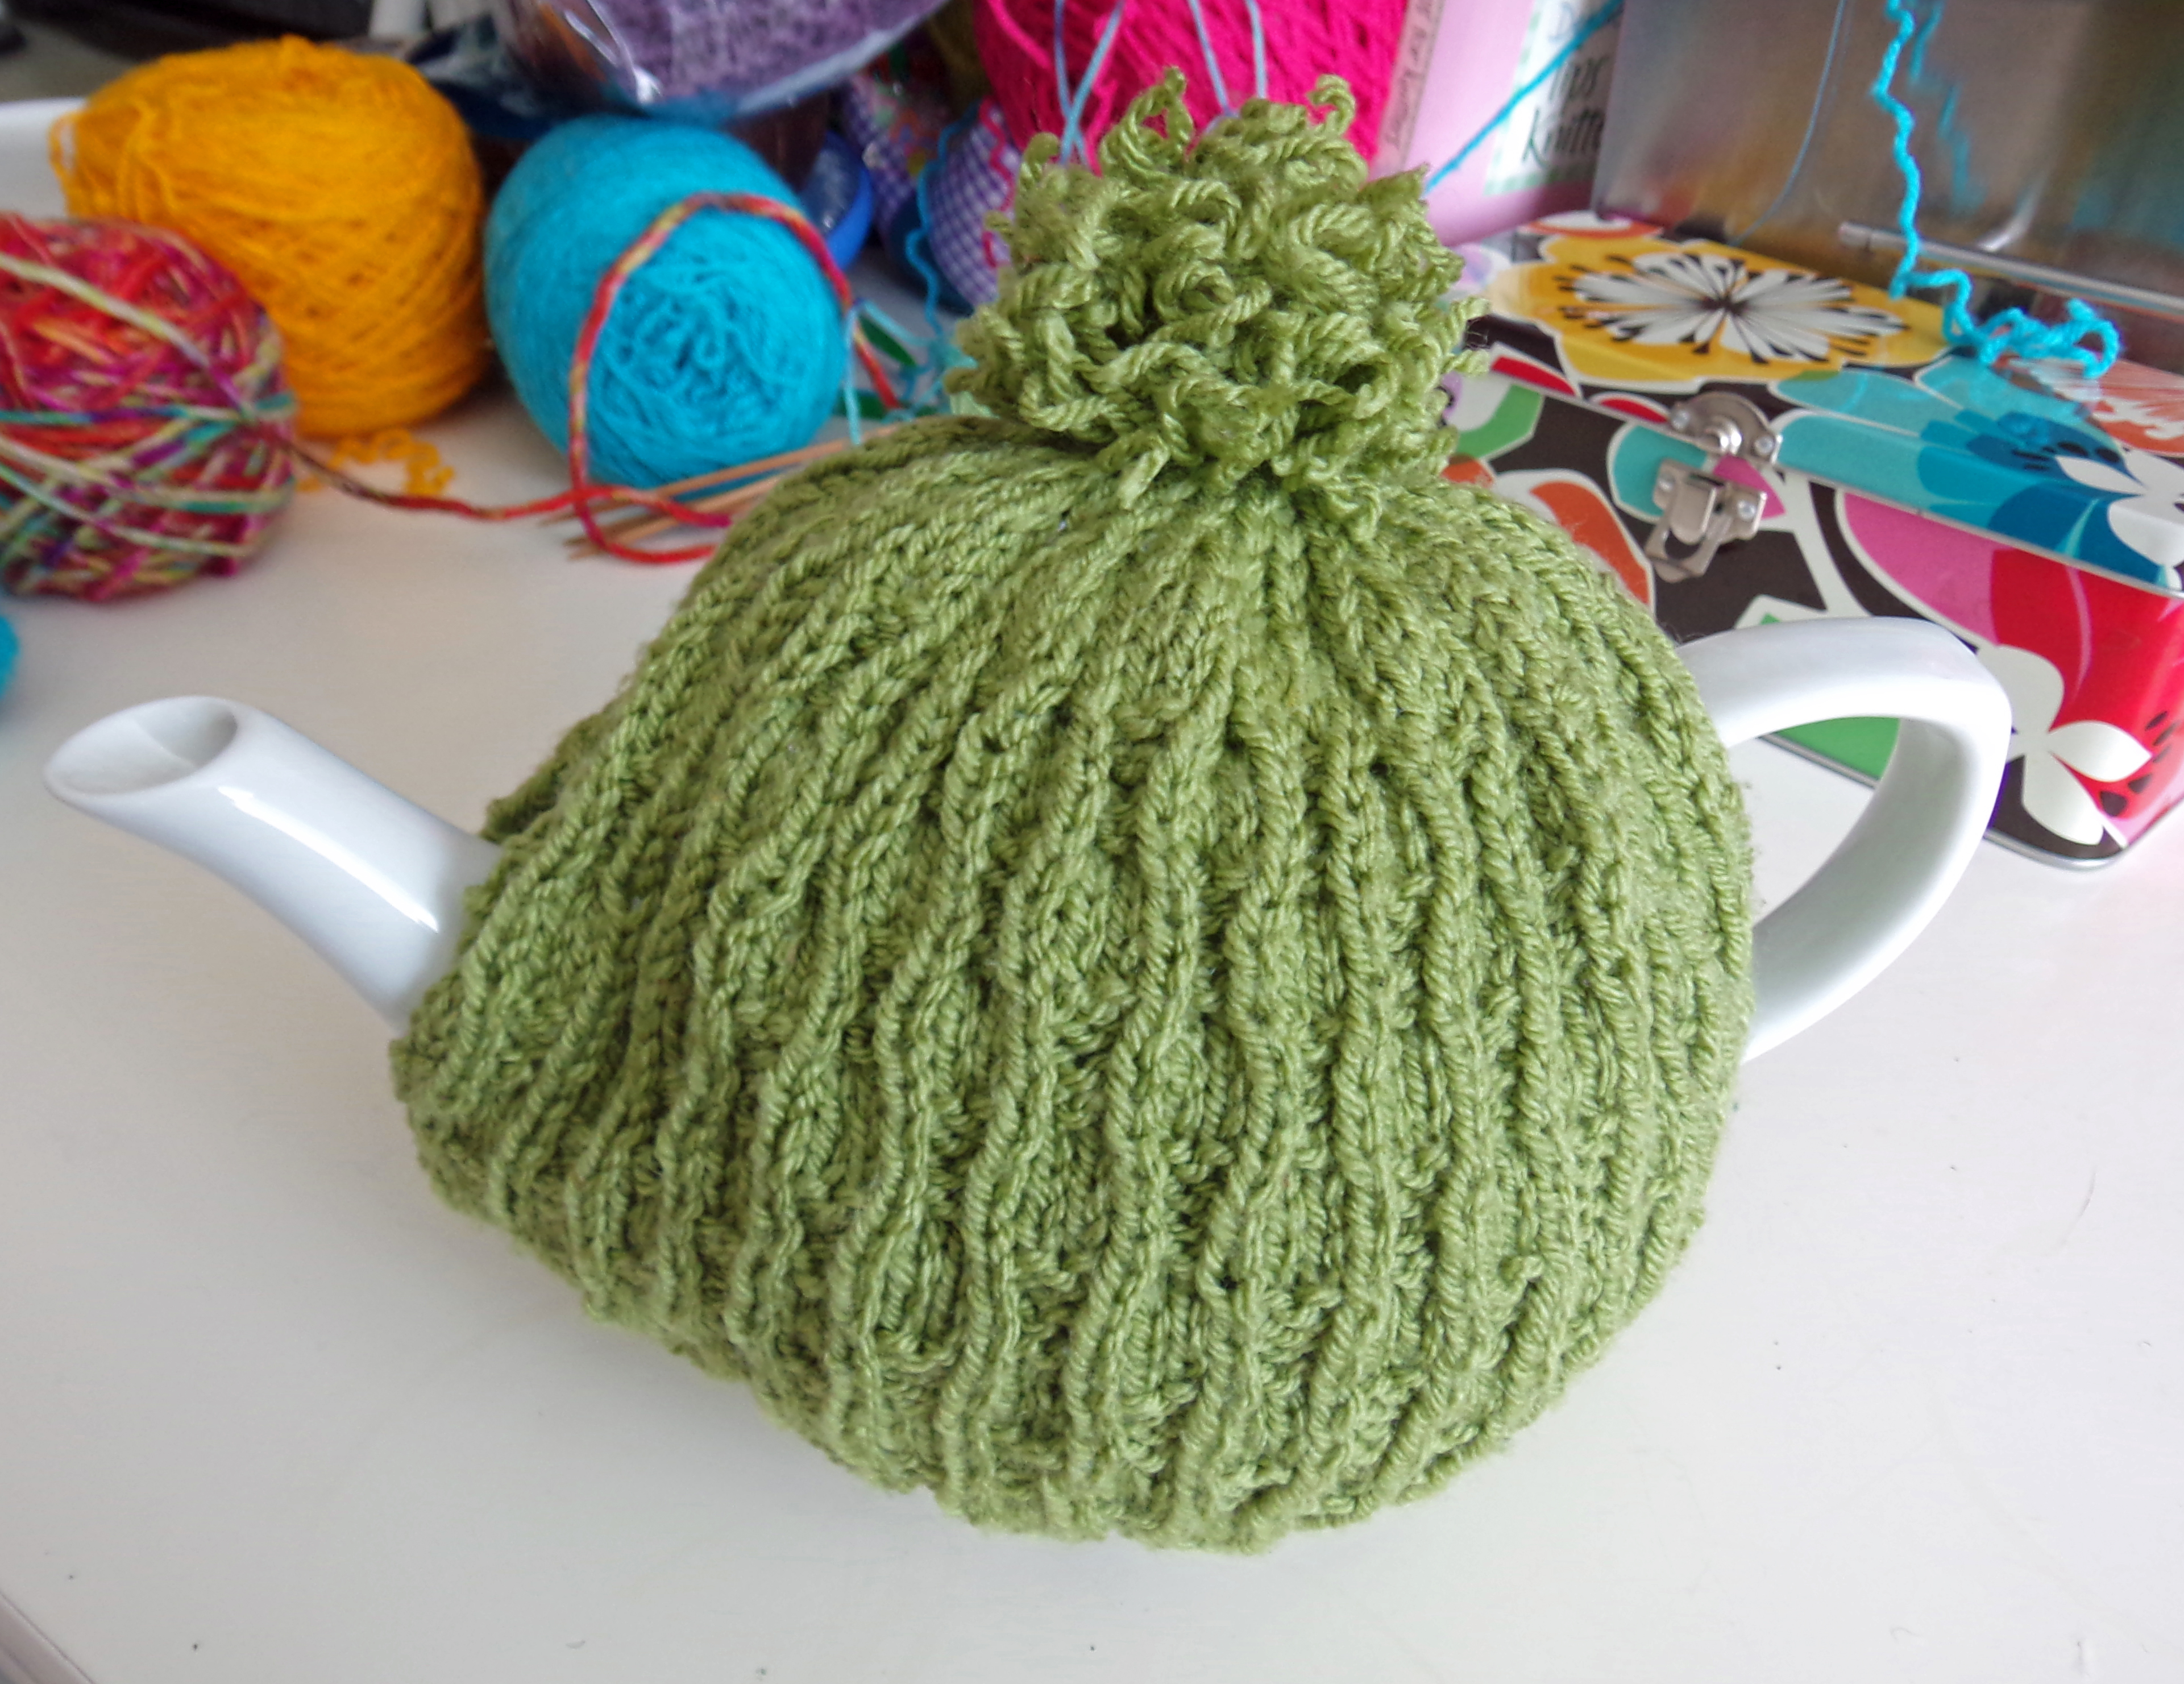 Love knitting tea cosy patterns